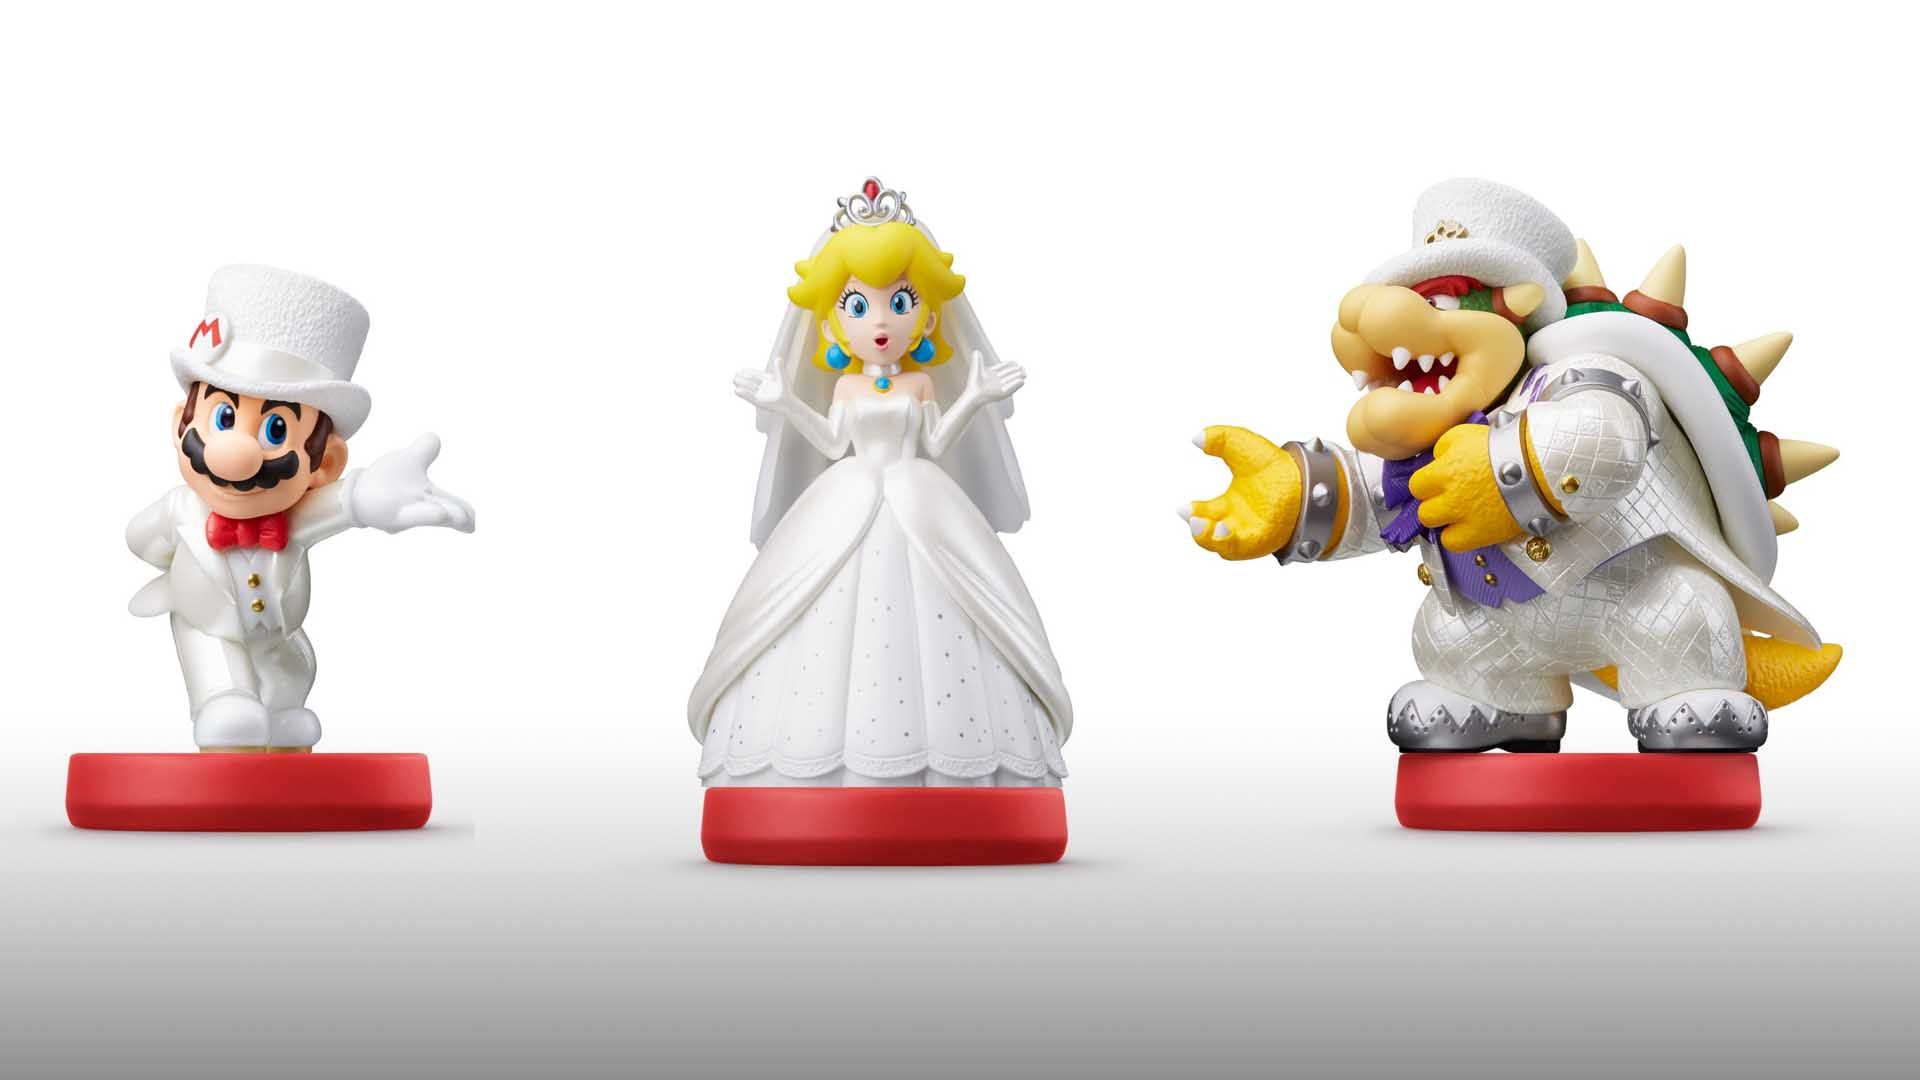 Wedding Super Mario Odyssey amiibo are in stock on Amazon